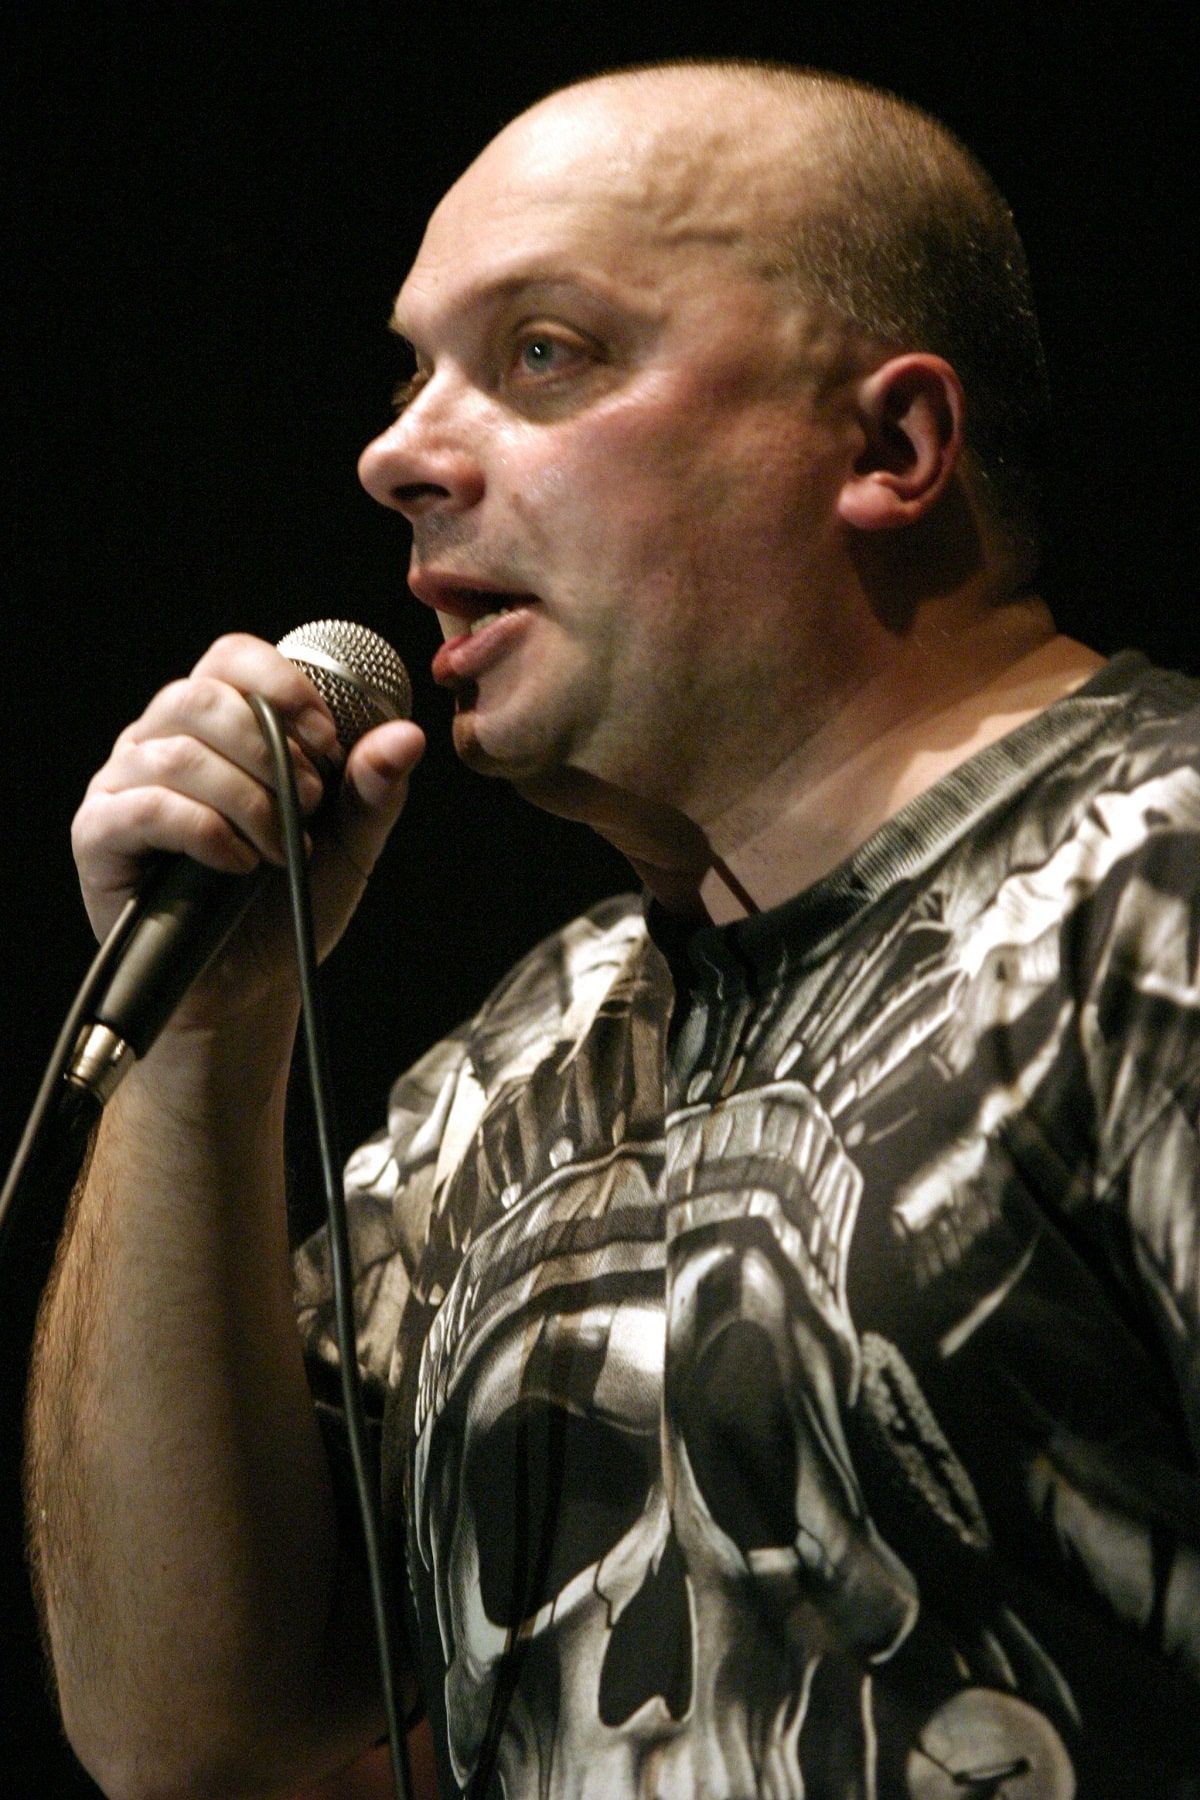 Krzysztof Skiba